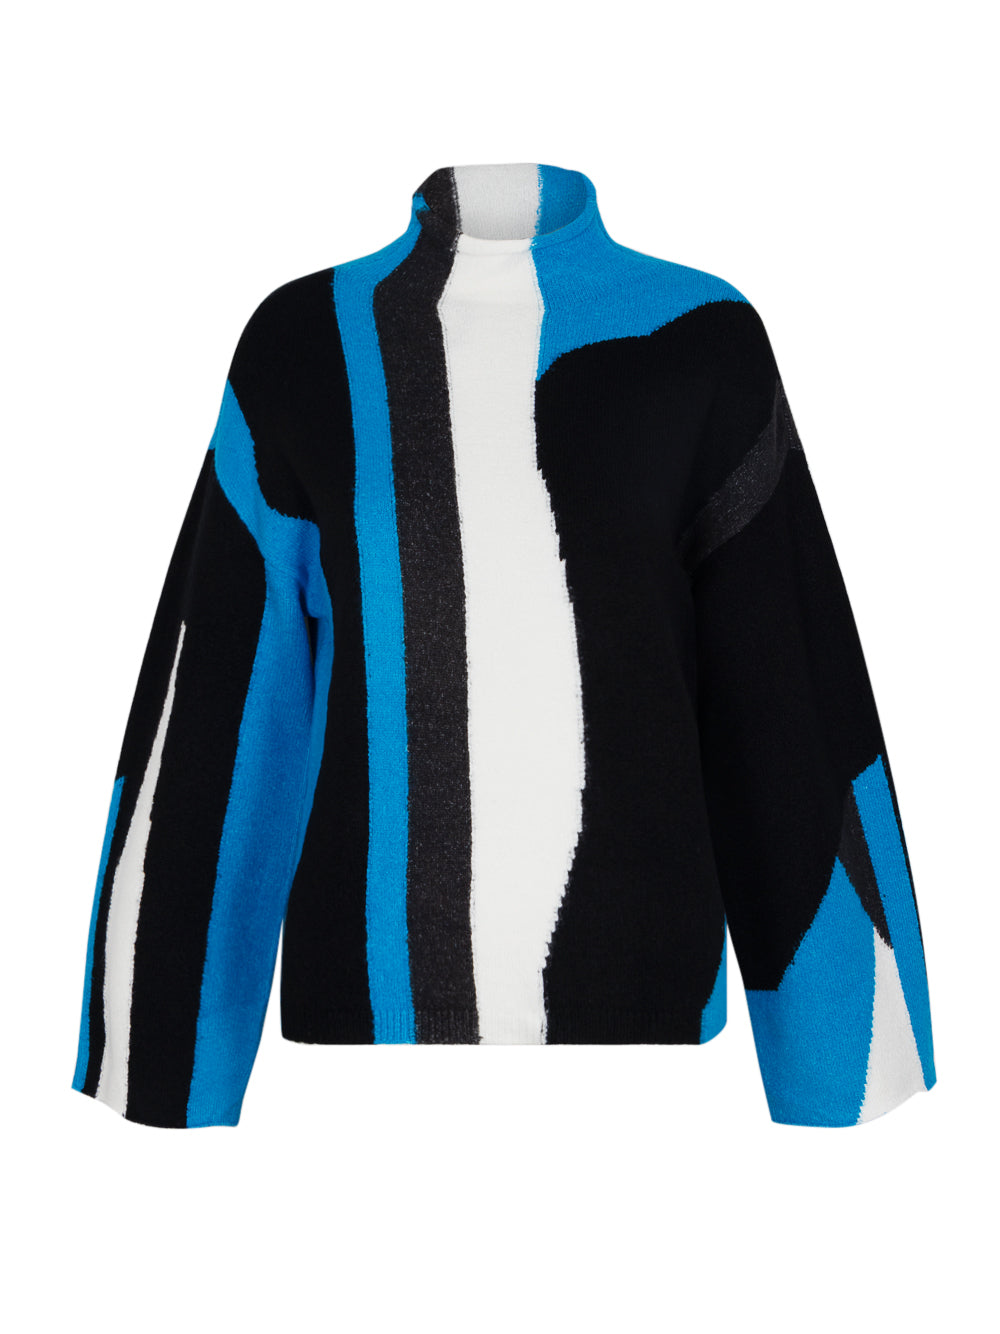 Asymmetric Colorblock Mock Neck Sweater (Black/Electric/Blue)